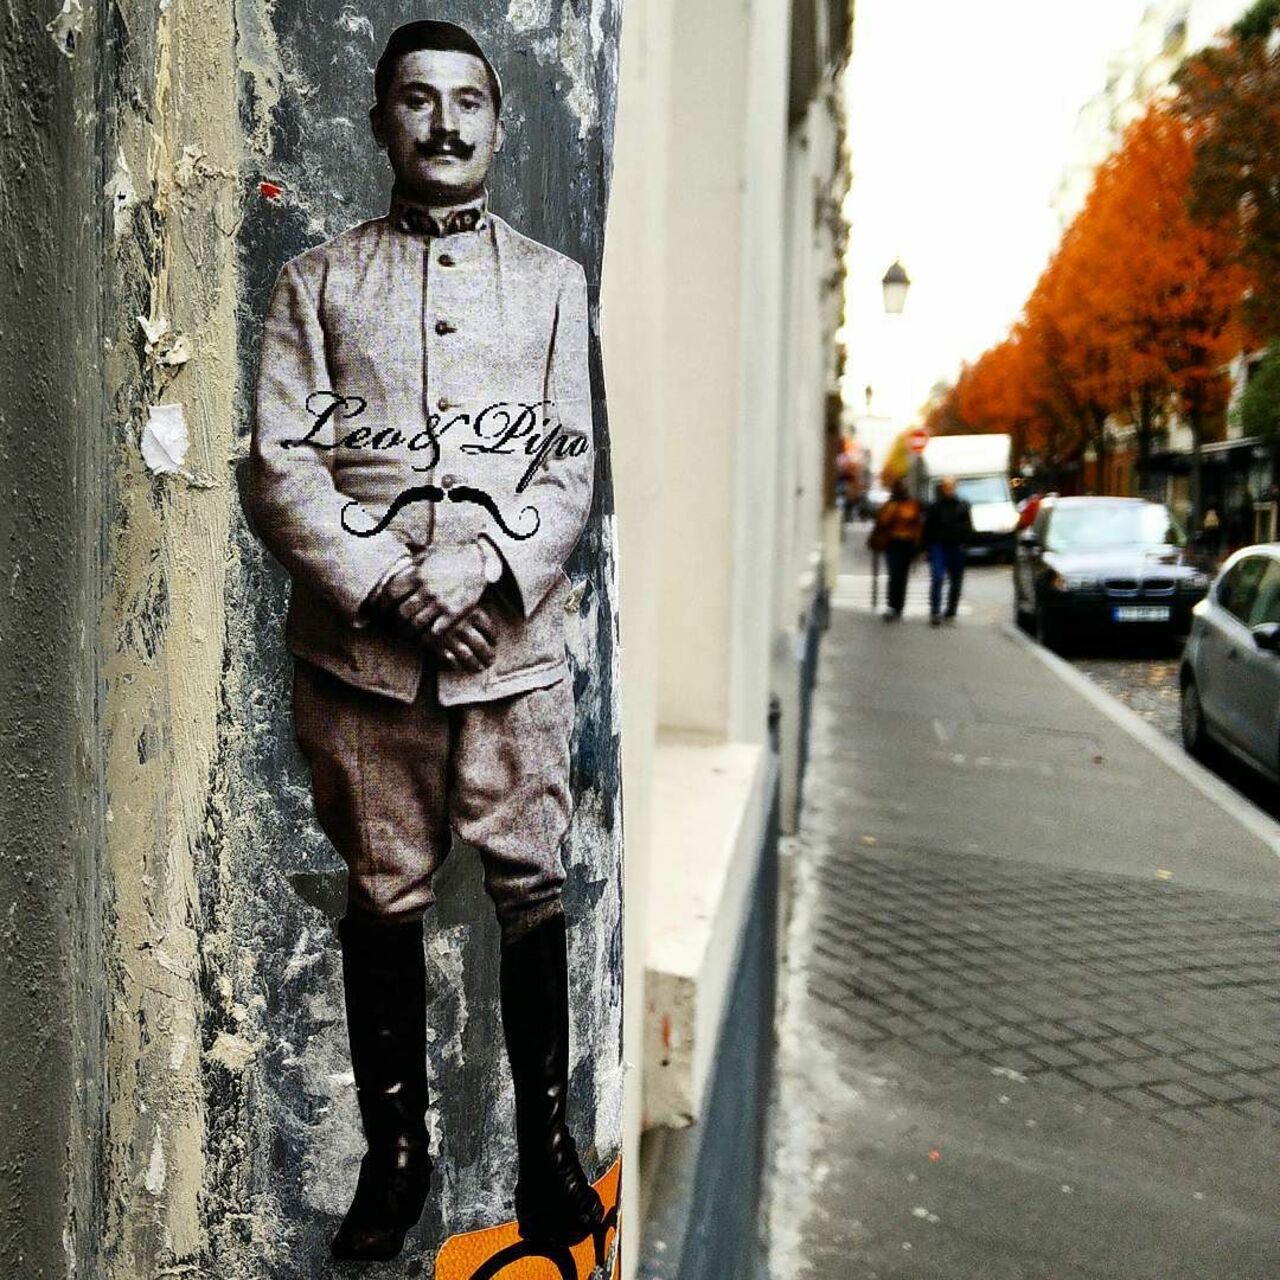 #Paris #graffiti photo by @ceky_art http://ift.tt/1LXMu90 #StreetArt https://t.co/DIQtY7ANlA